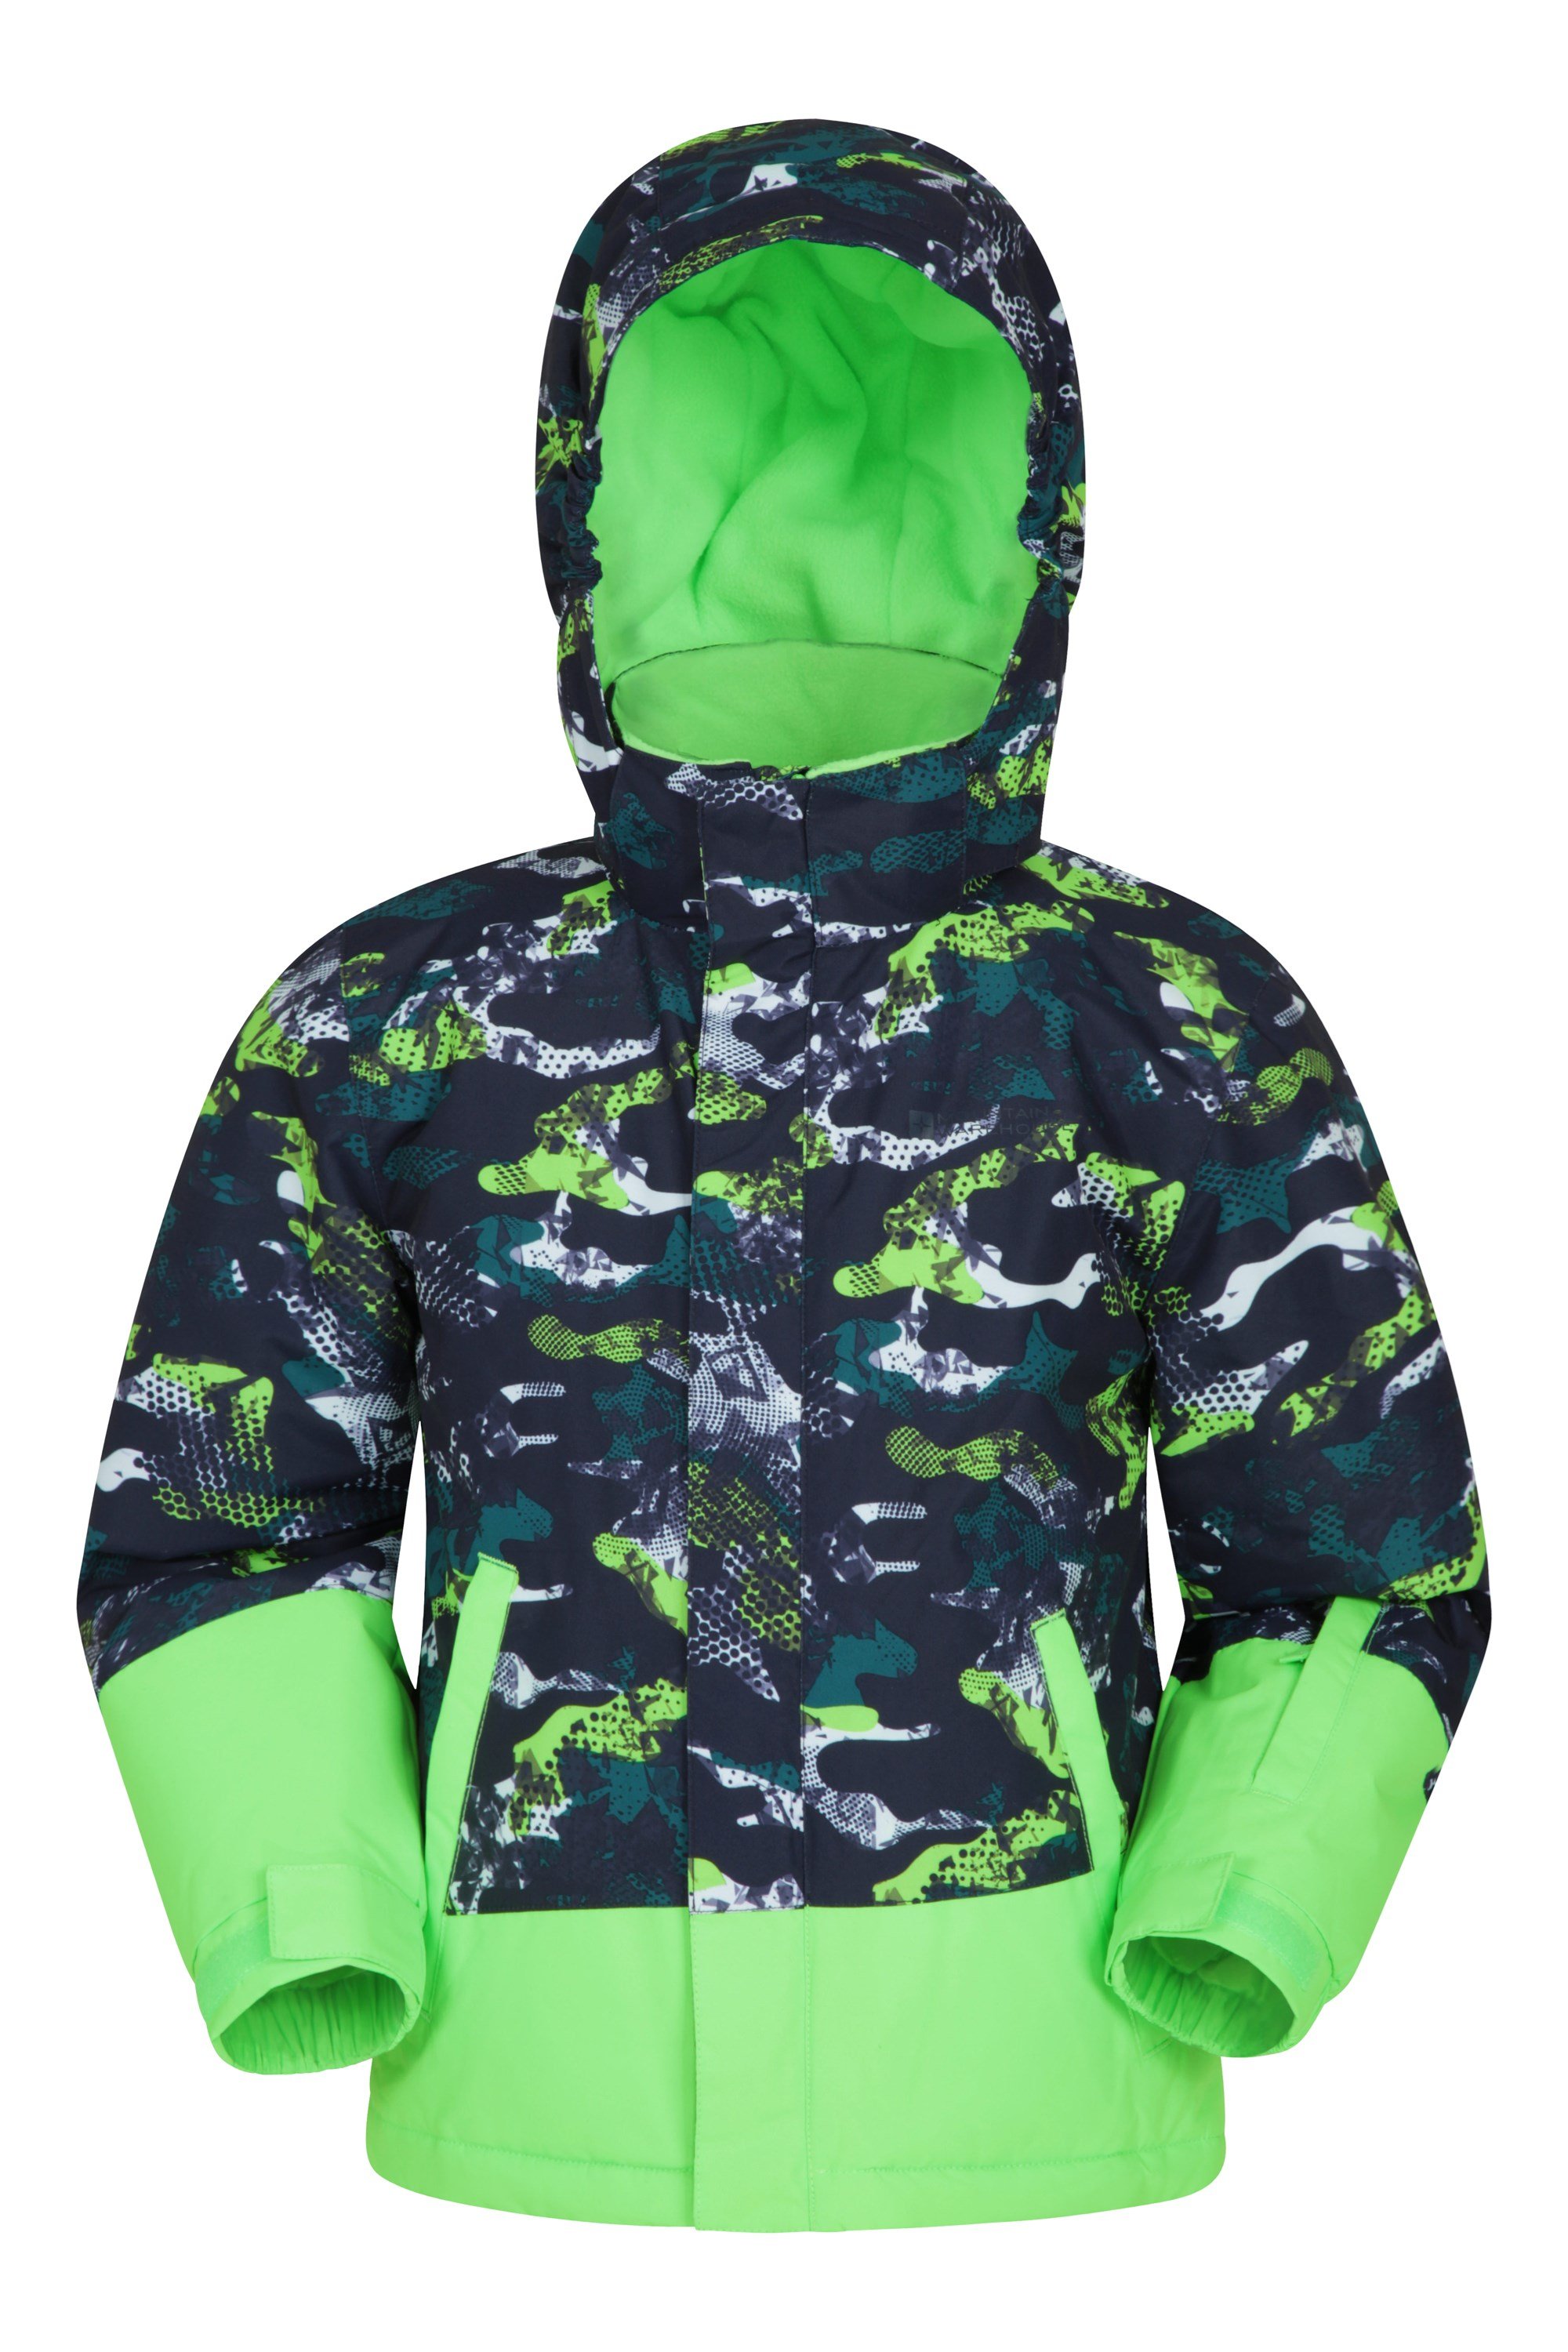 Mountain Warehouse Vail Kids Ski Jacket Waterproof Winter Coat 